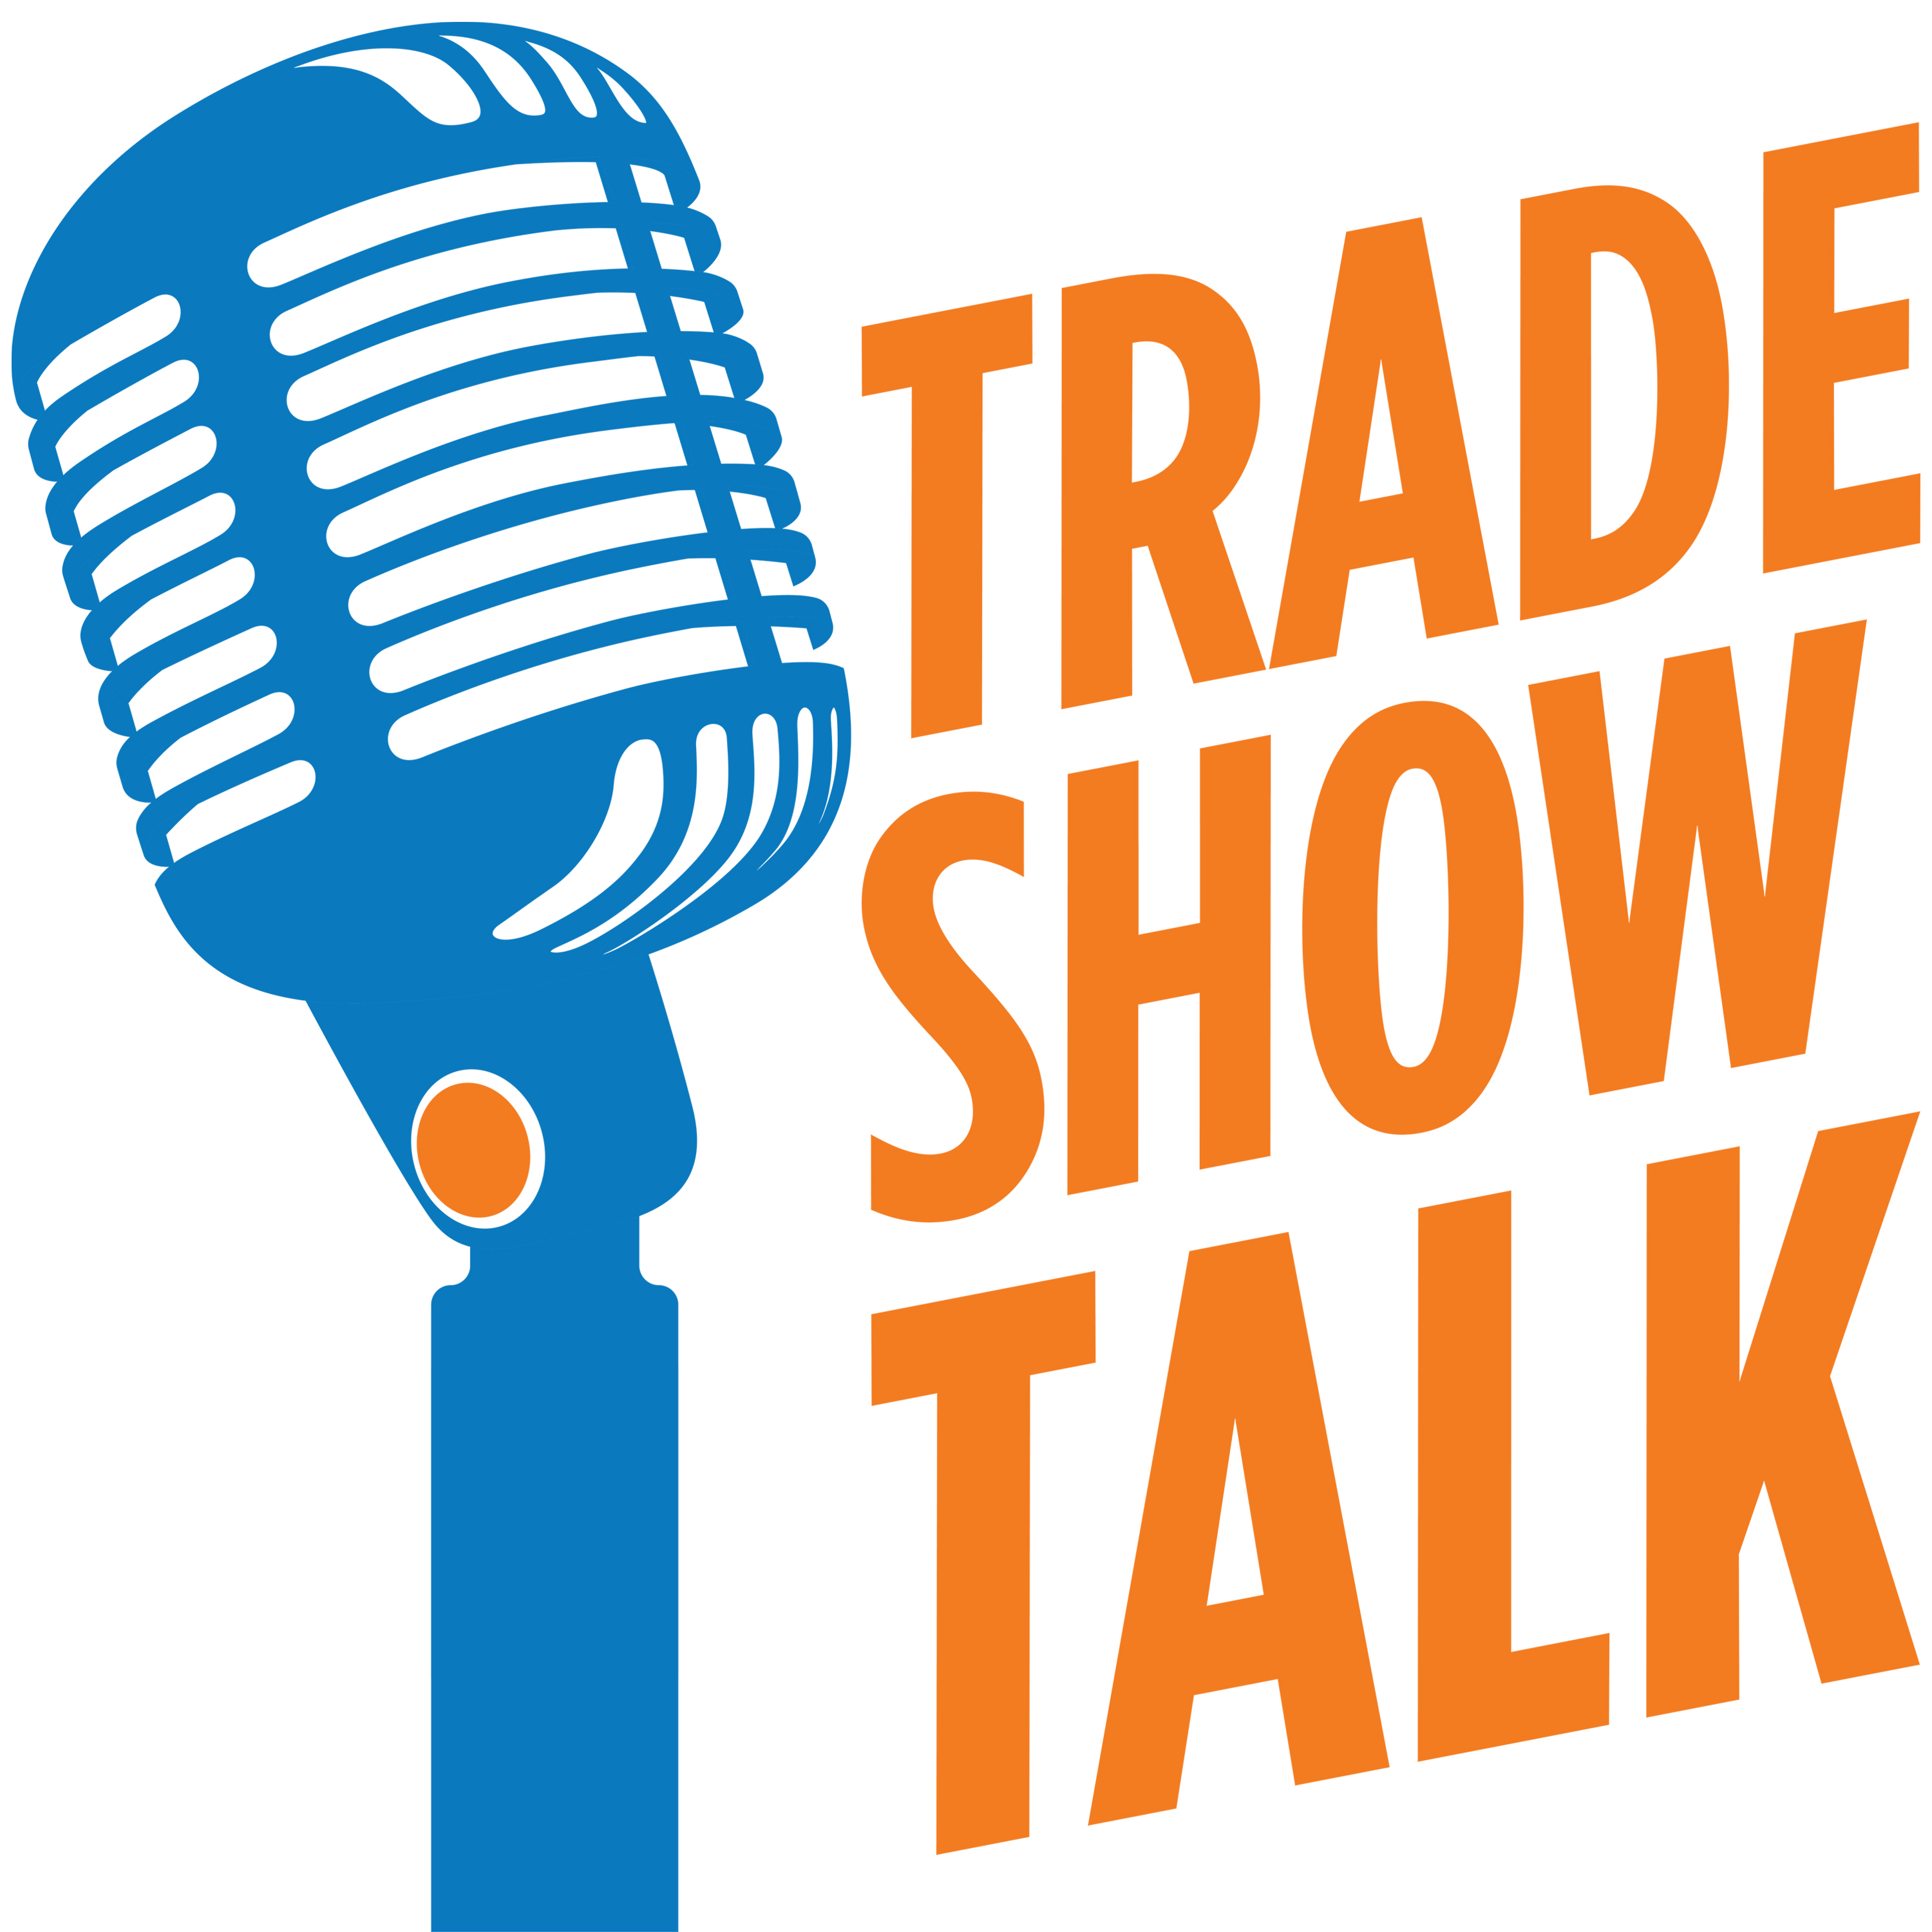 Trade show Talk